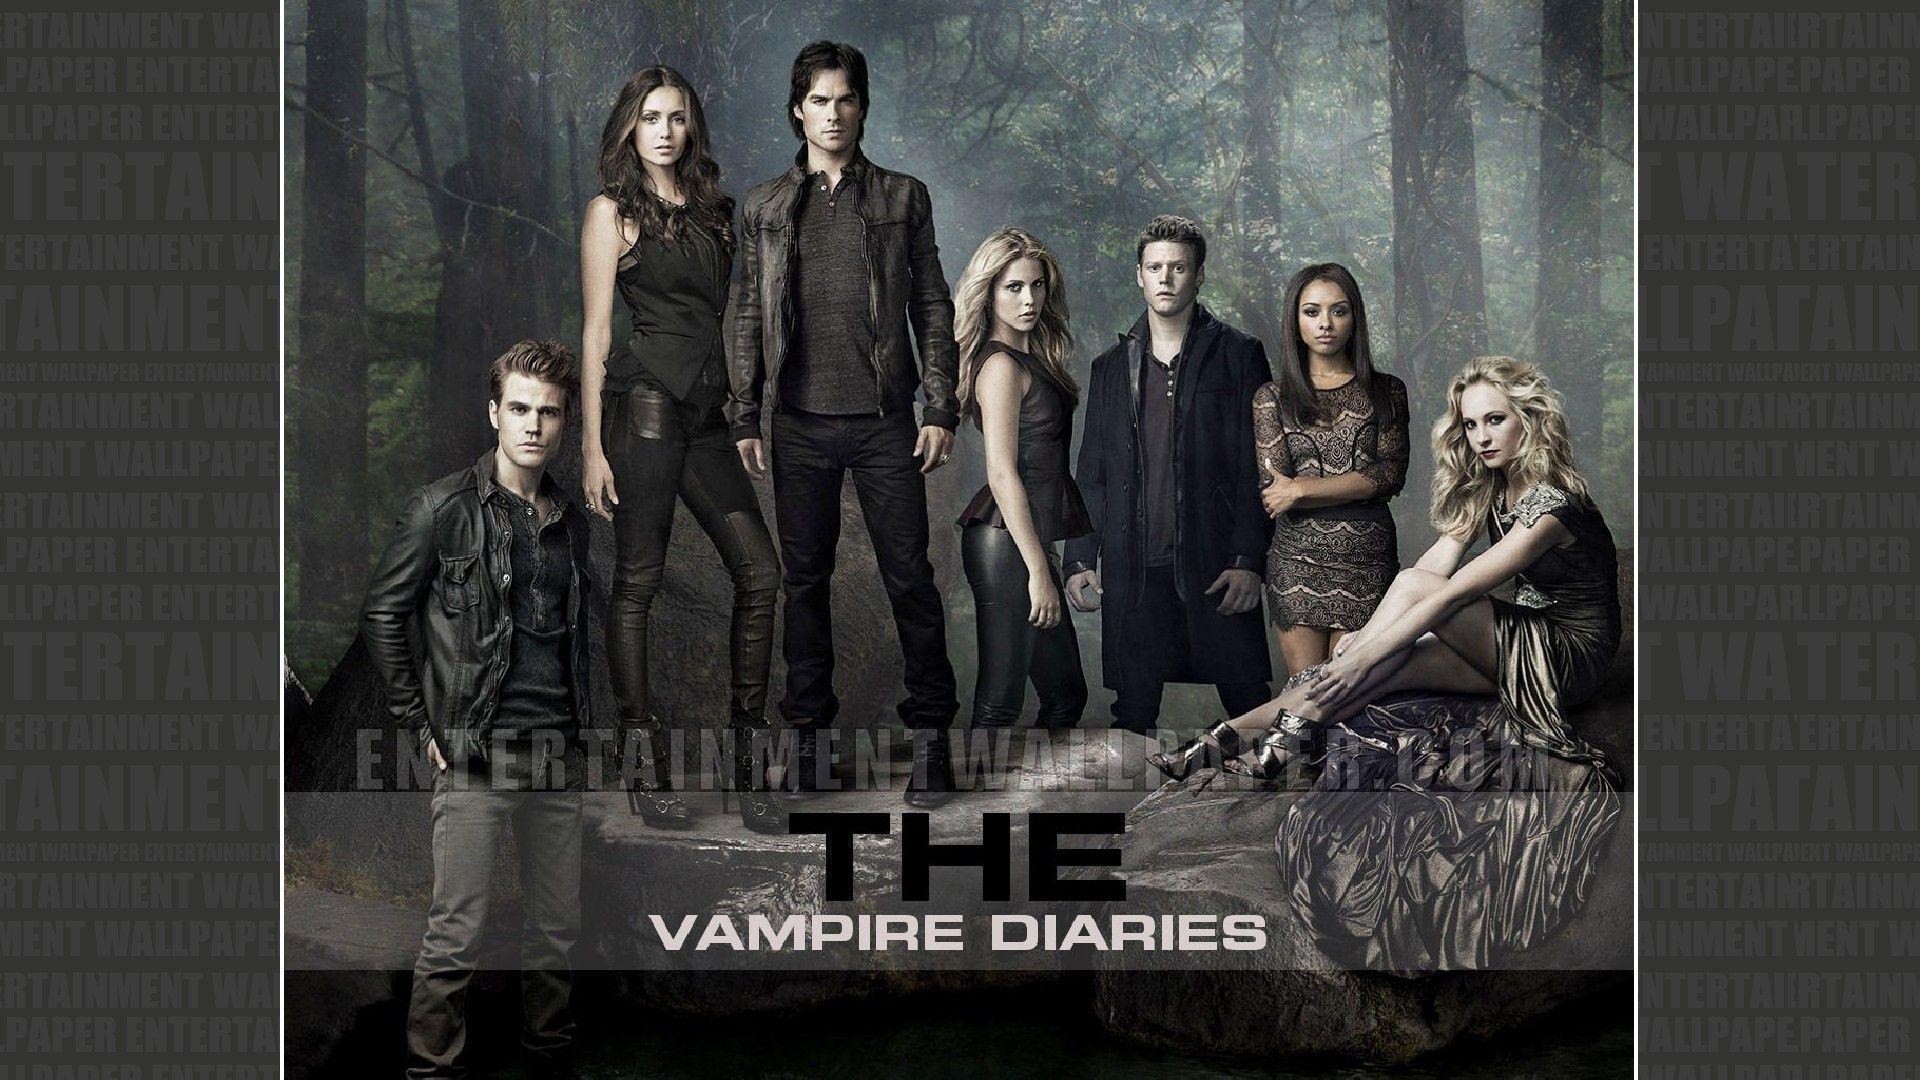 The Vampire Diaries Wallpaper. The Originals Vampire Diaries